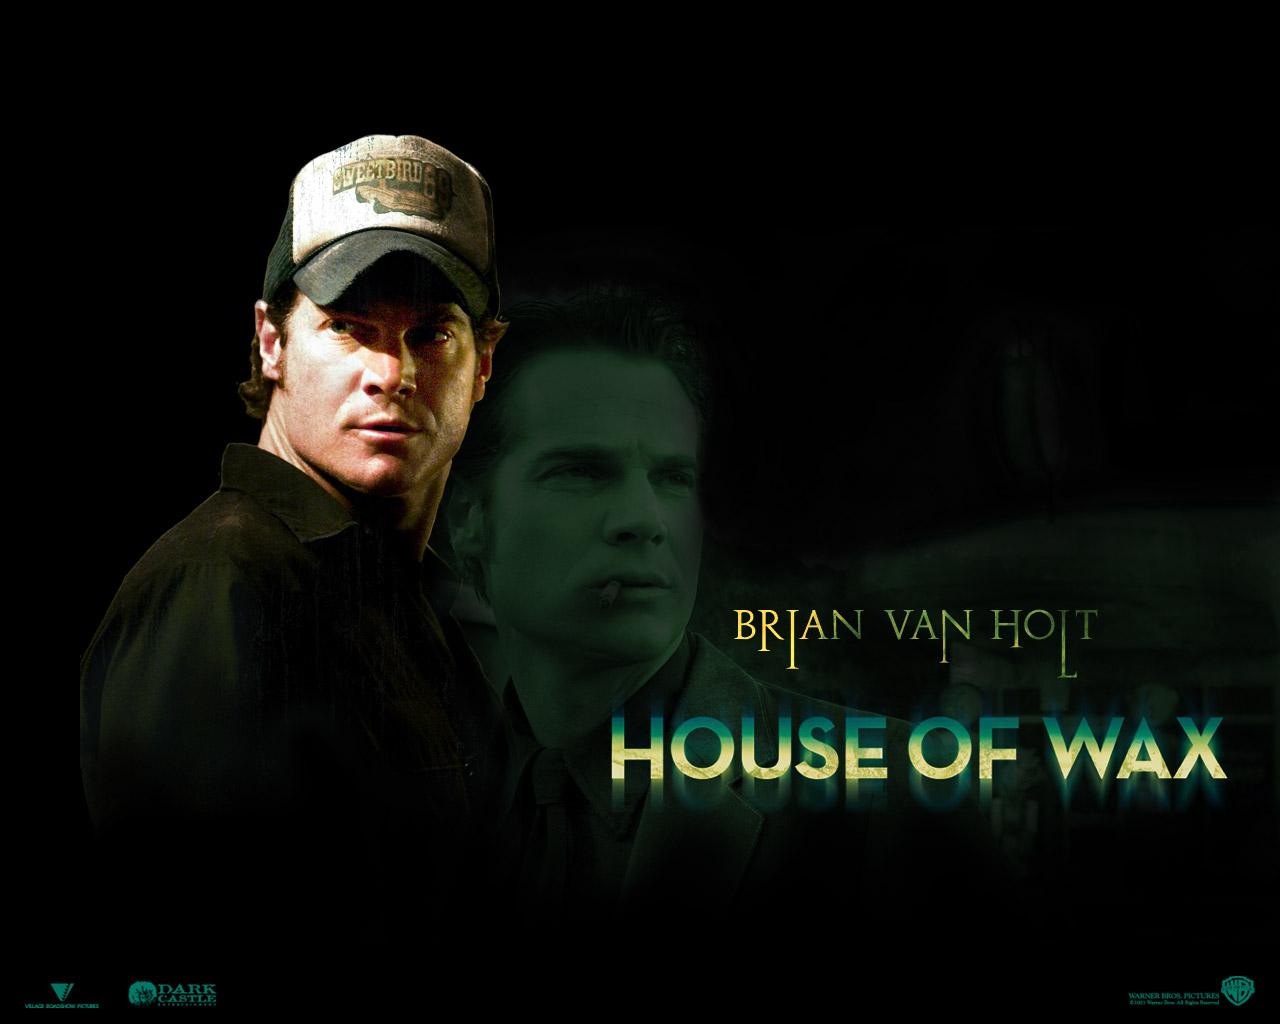 House of wax 7